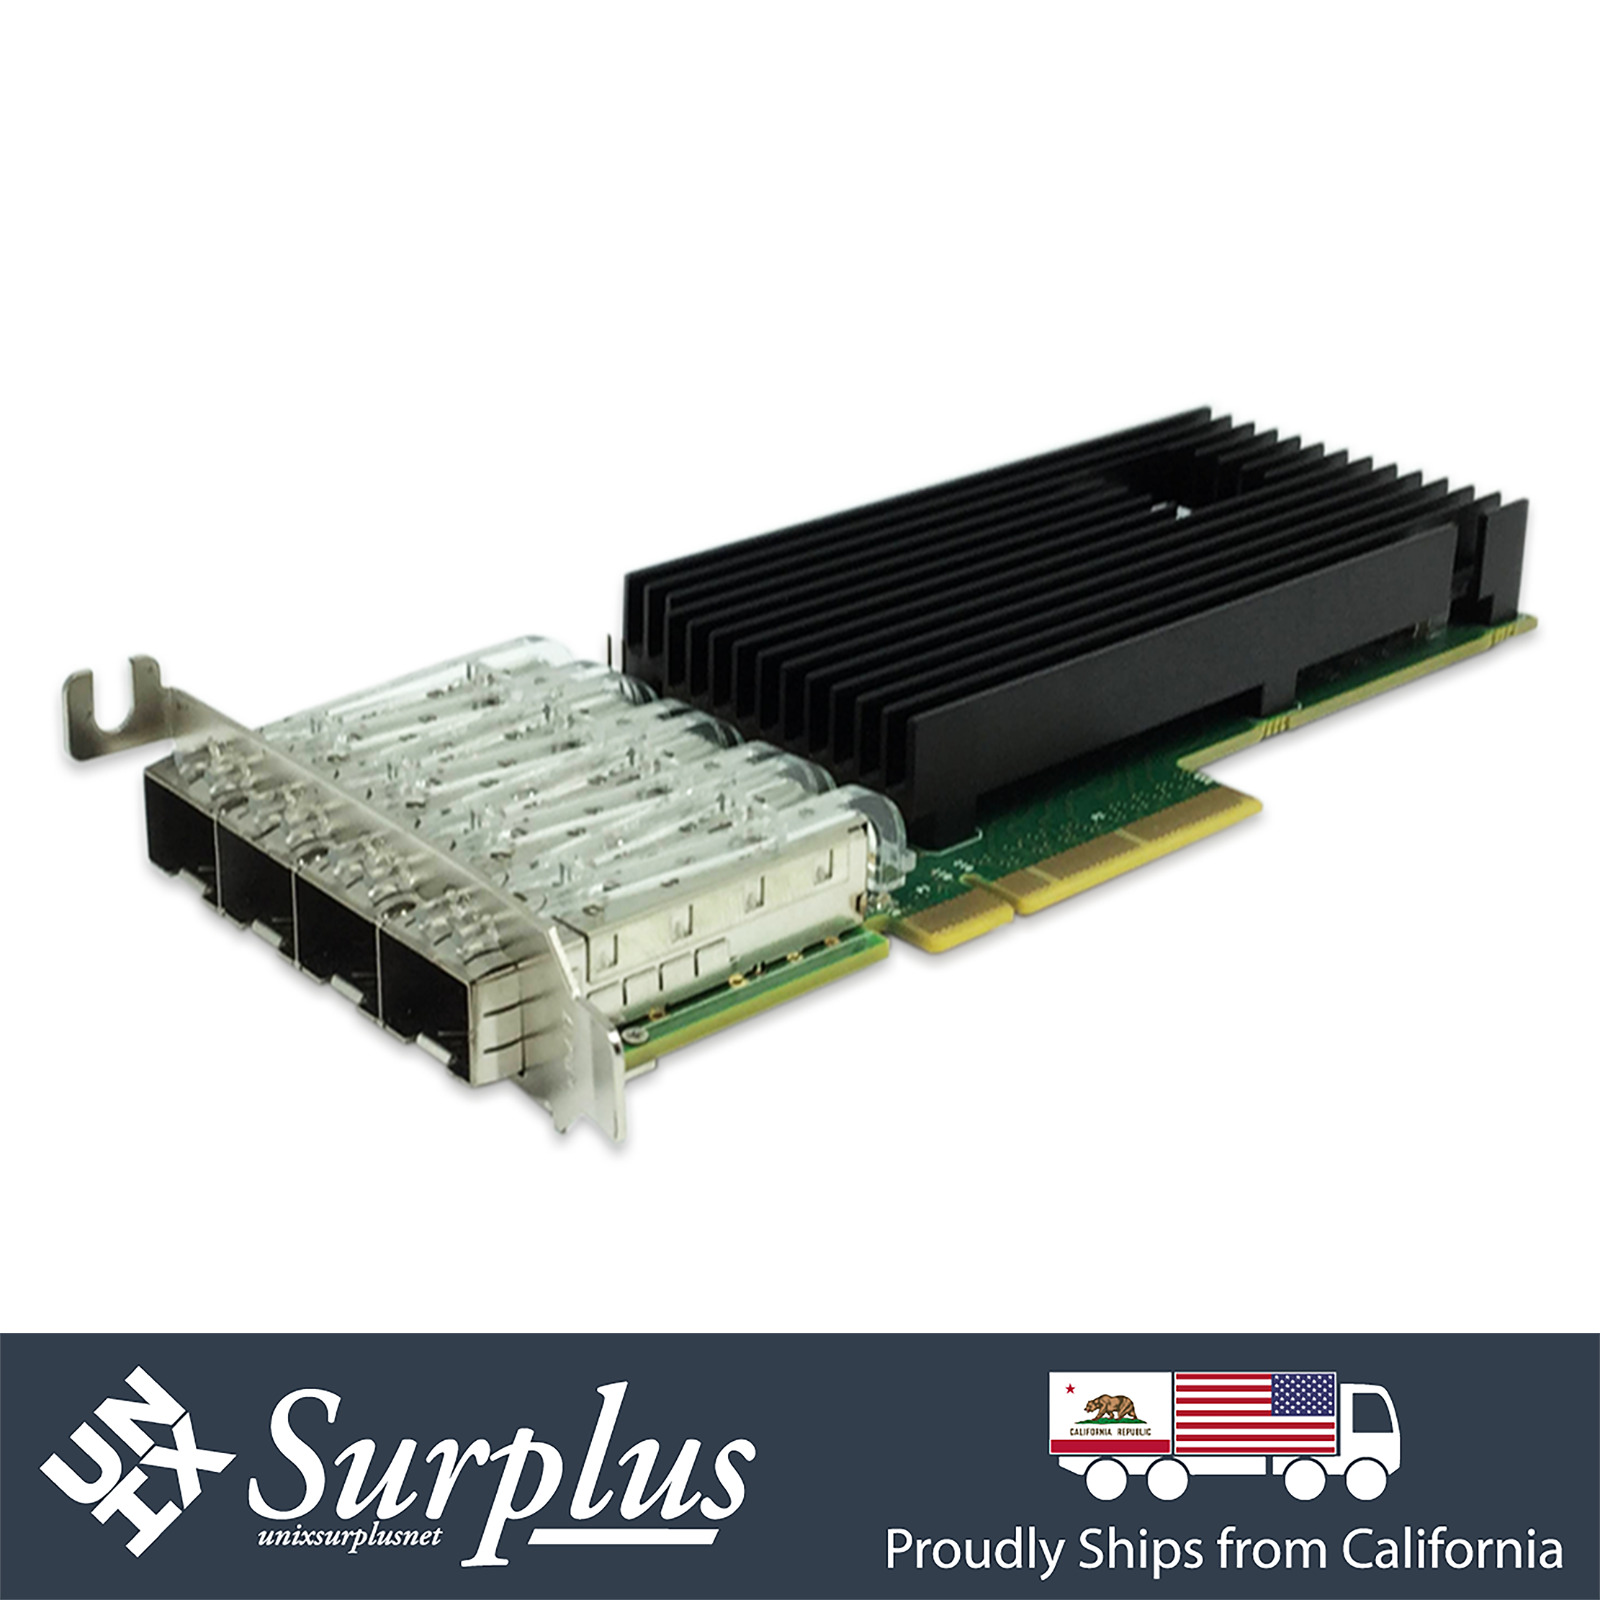 Silicom PE310G4I71LB-XR Quad Port 10GB SFP+ PCIe Intel XL710 Network Card Low